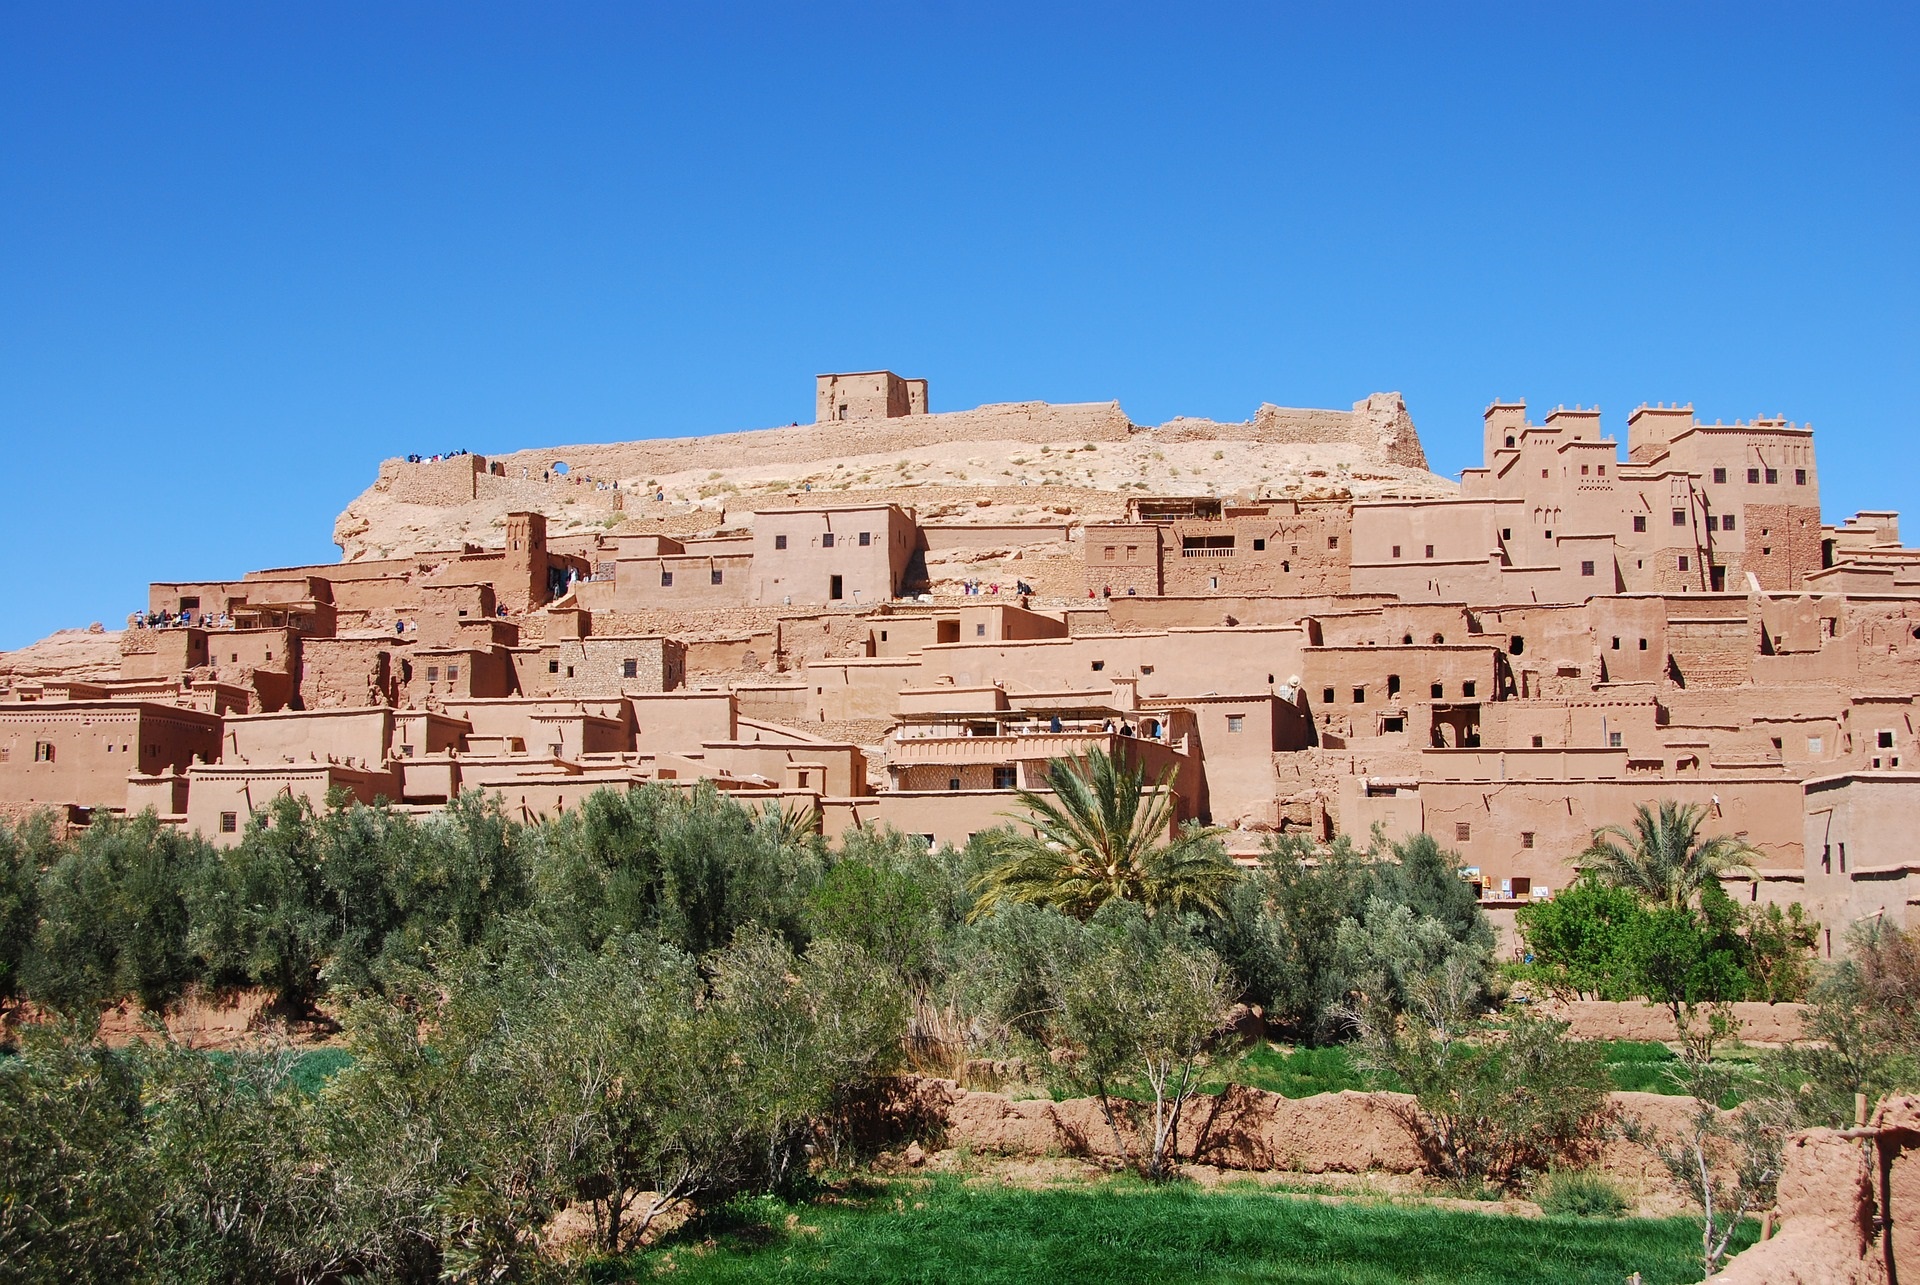 Marokko_Ouarzazate_pixabay_FOC_4155429_1920